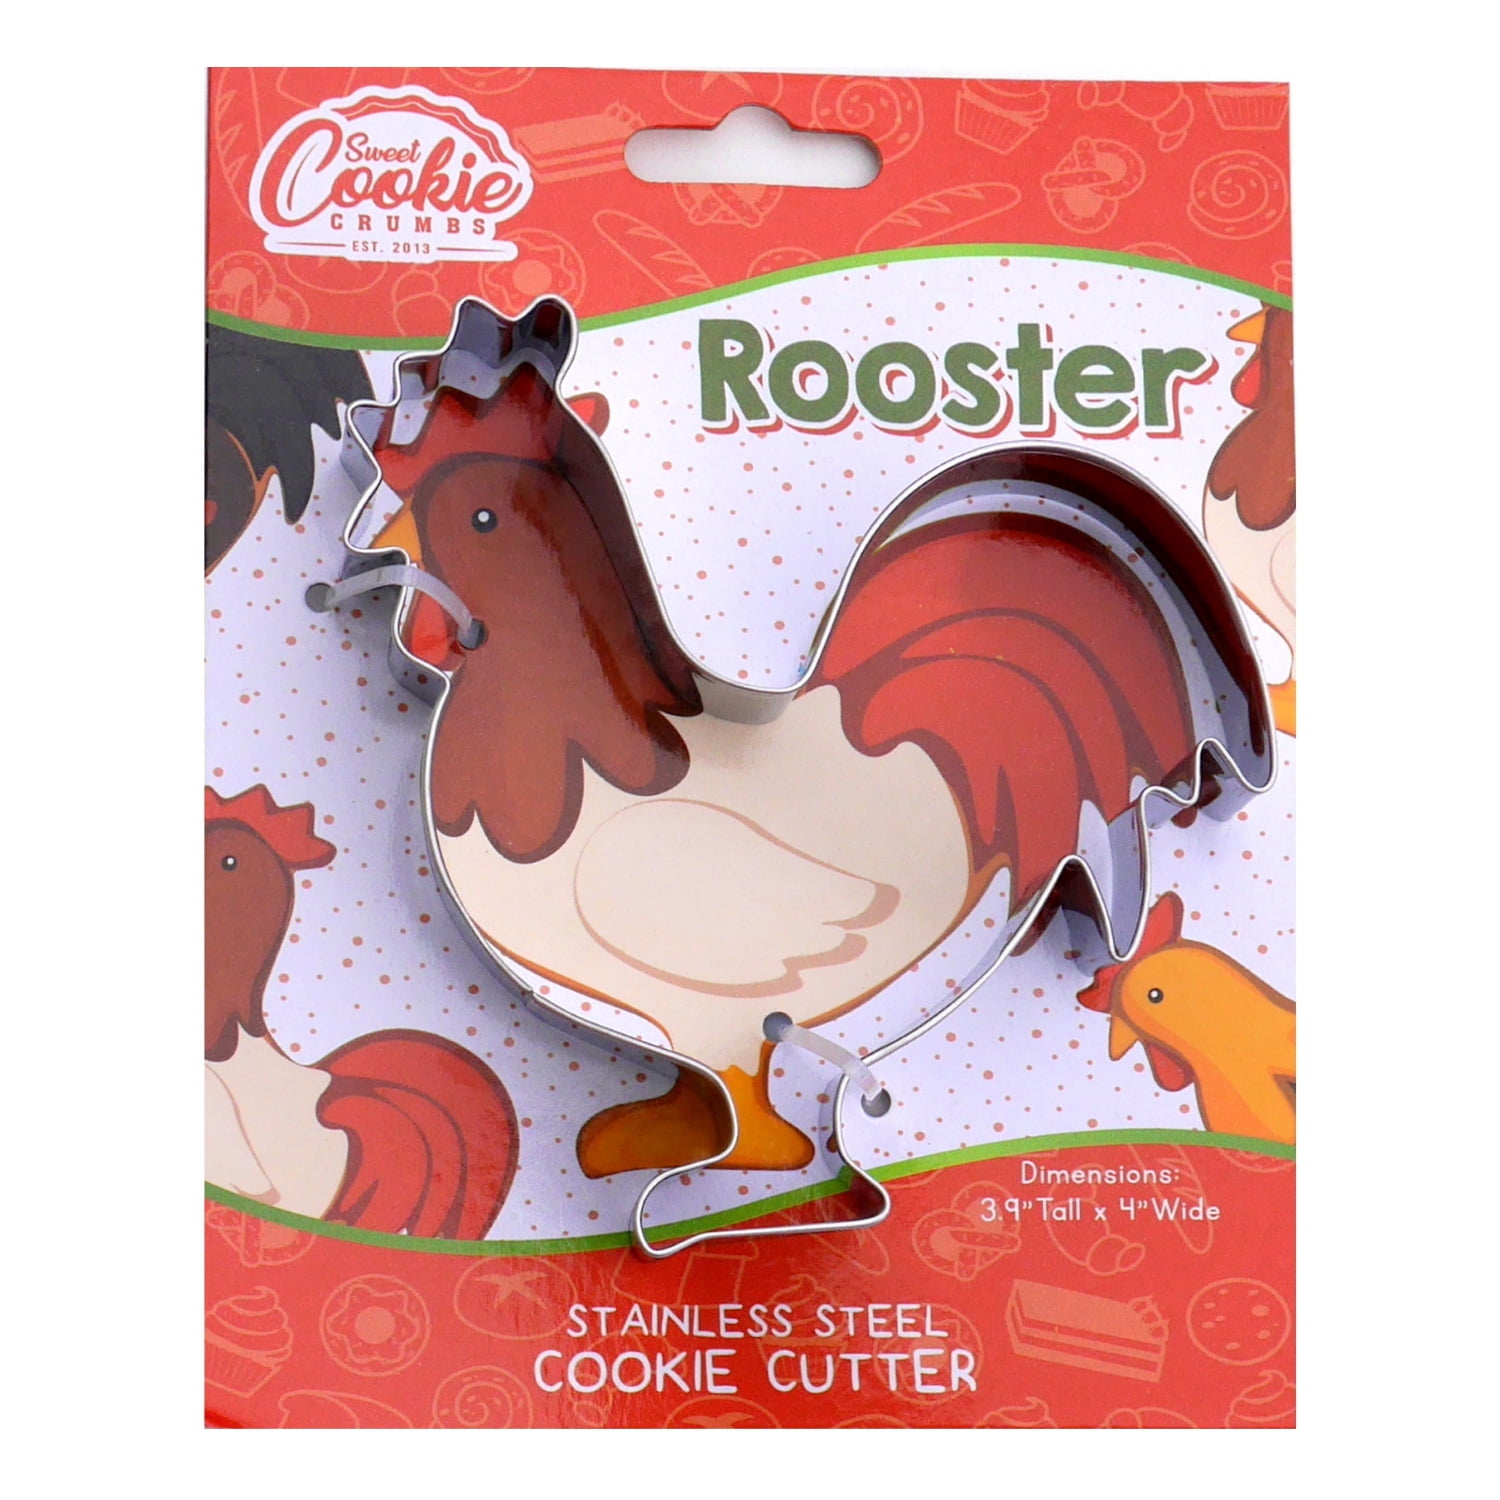 Chicken cookie cutter 4.25 Rooster cookie cutter